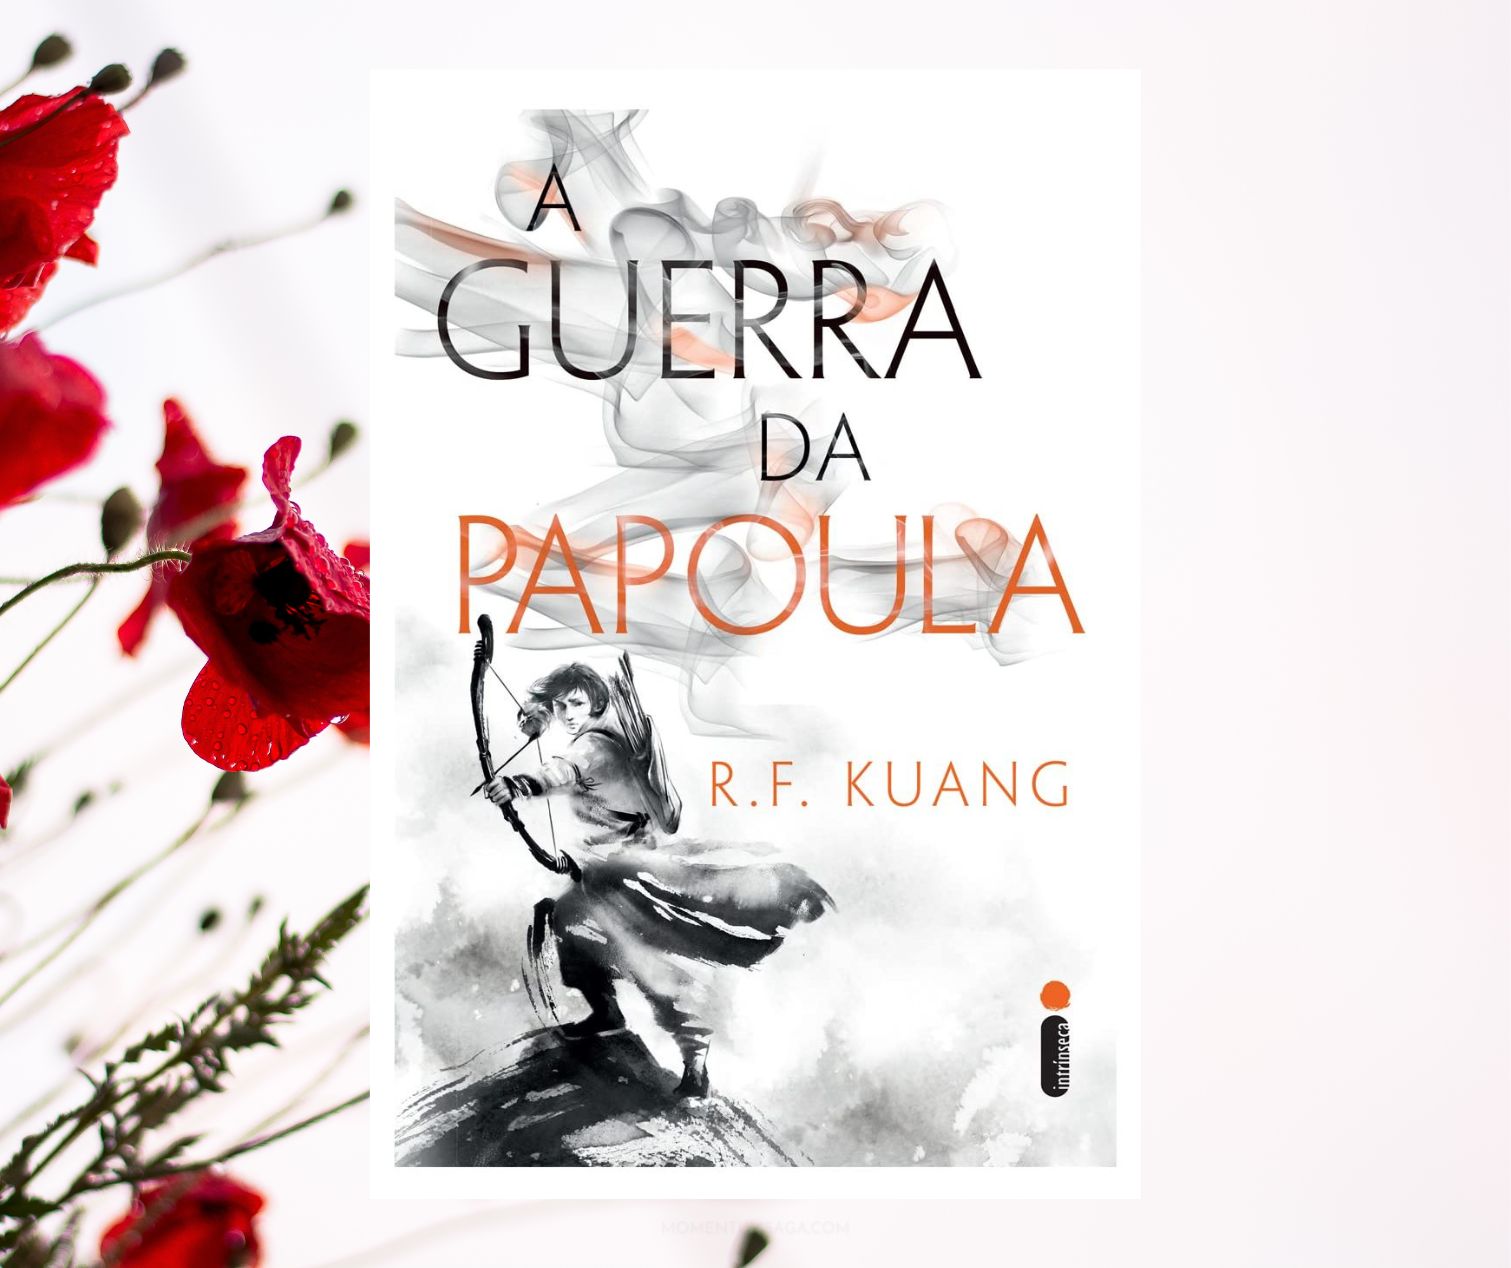 Resenha: A guerra da papoula, de R. F. Kuang